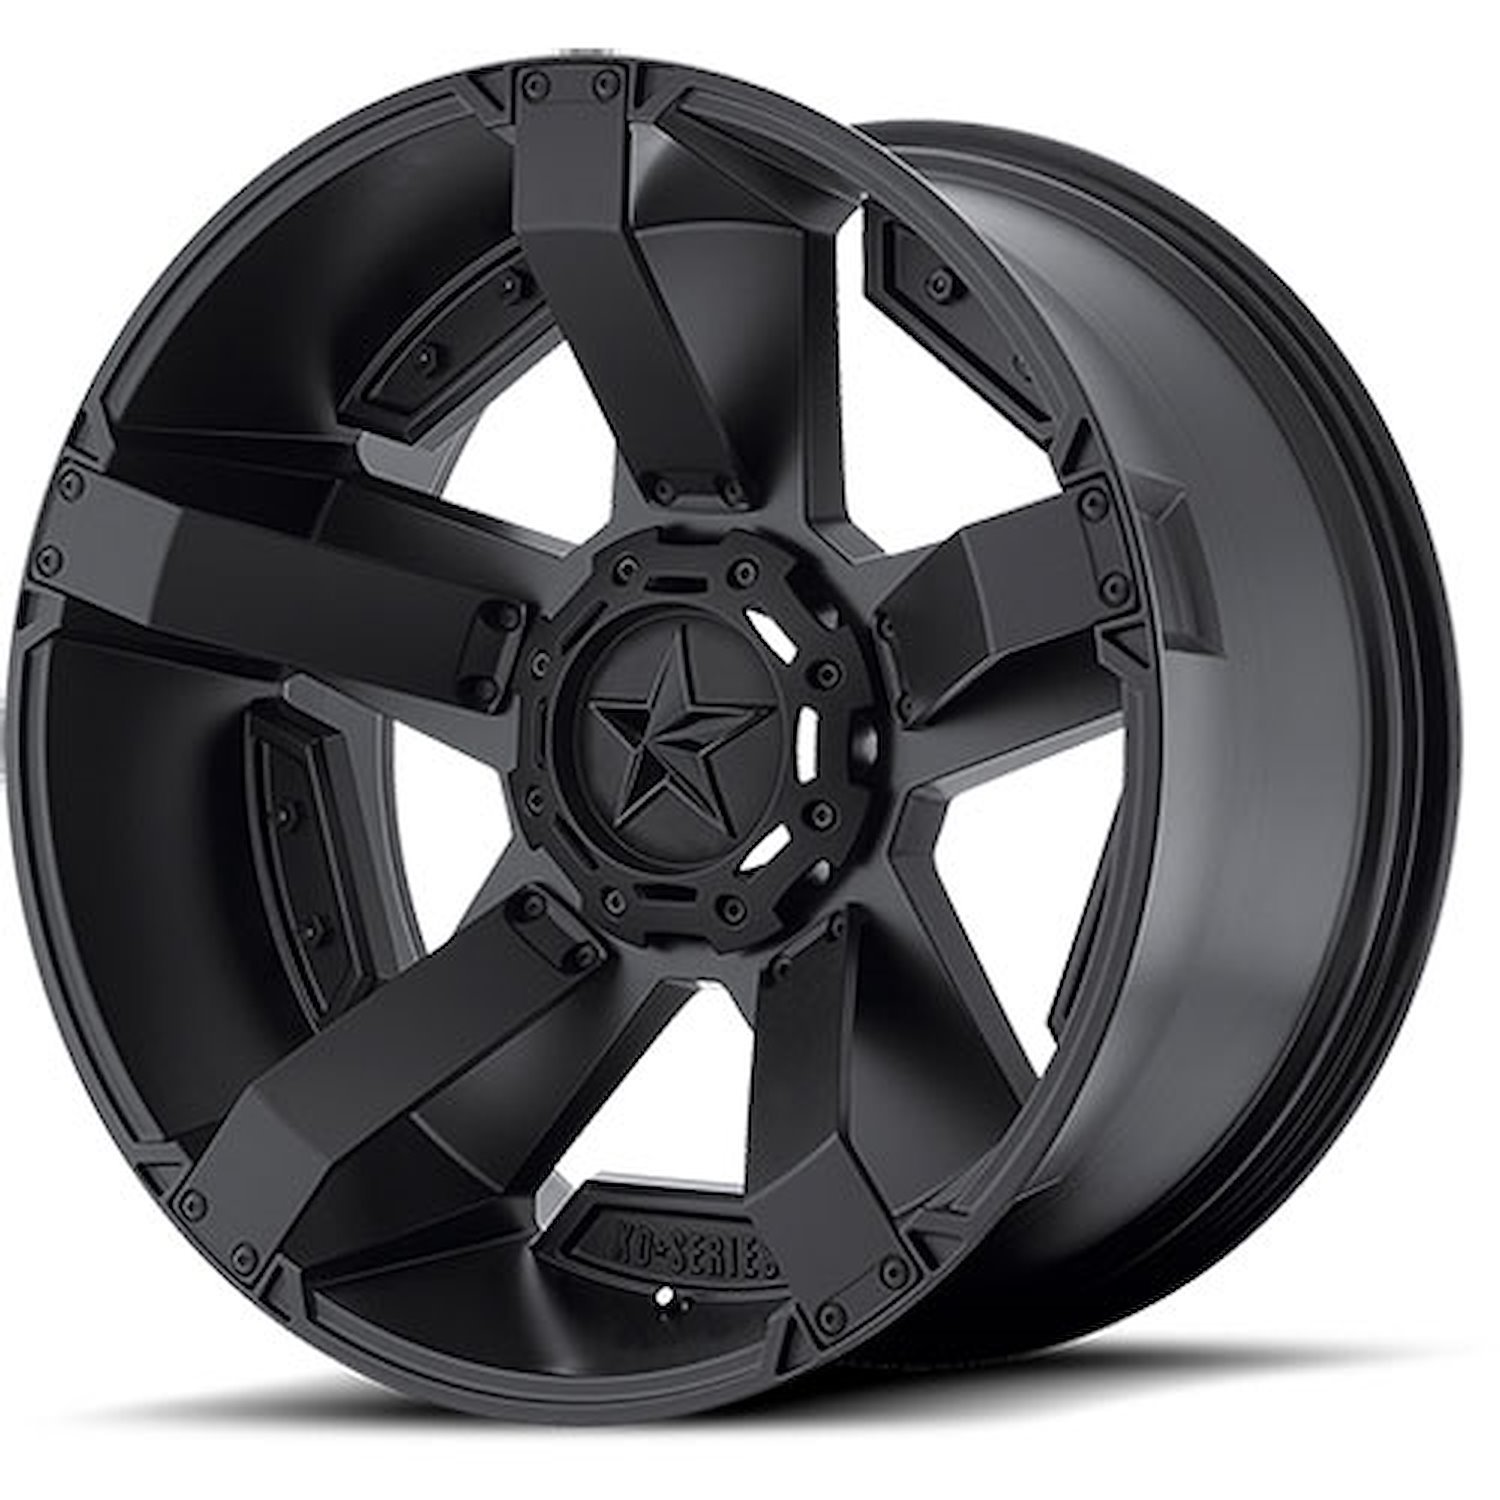 XD811 Series RS2 Rockstar Wheel Size: 17" x 8"